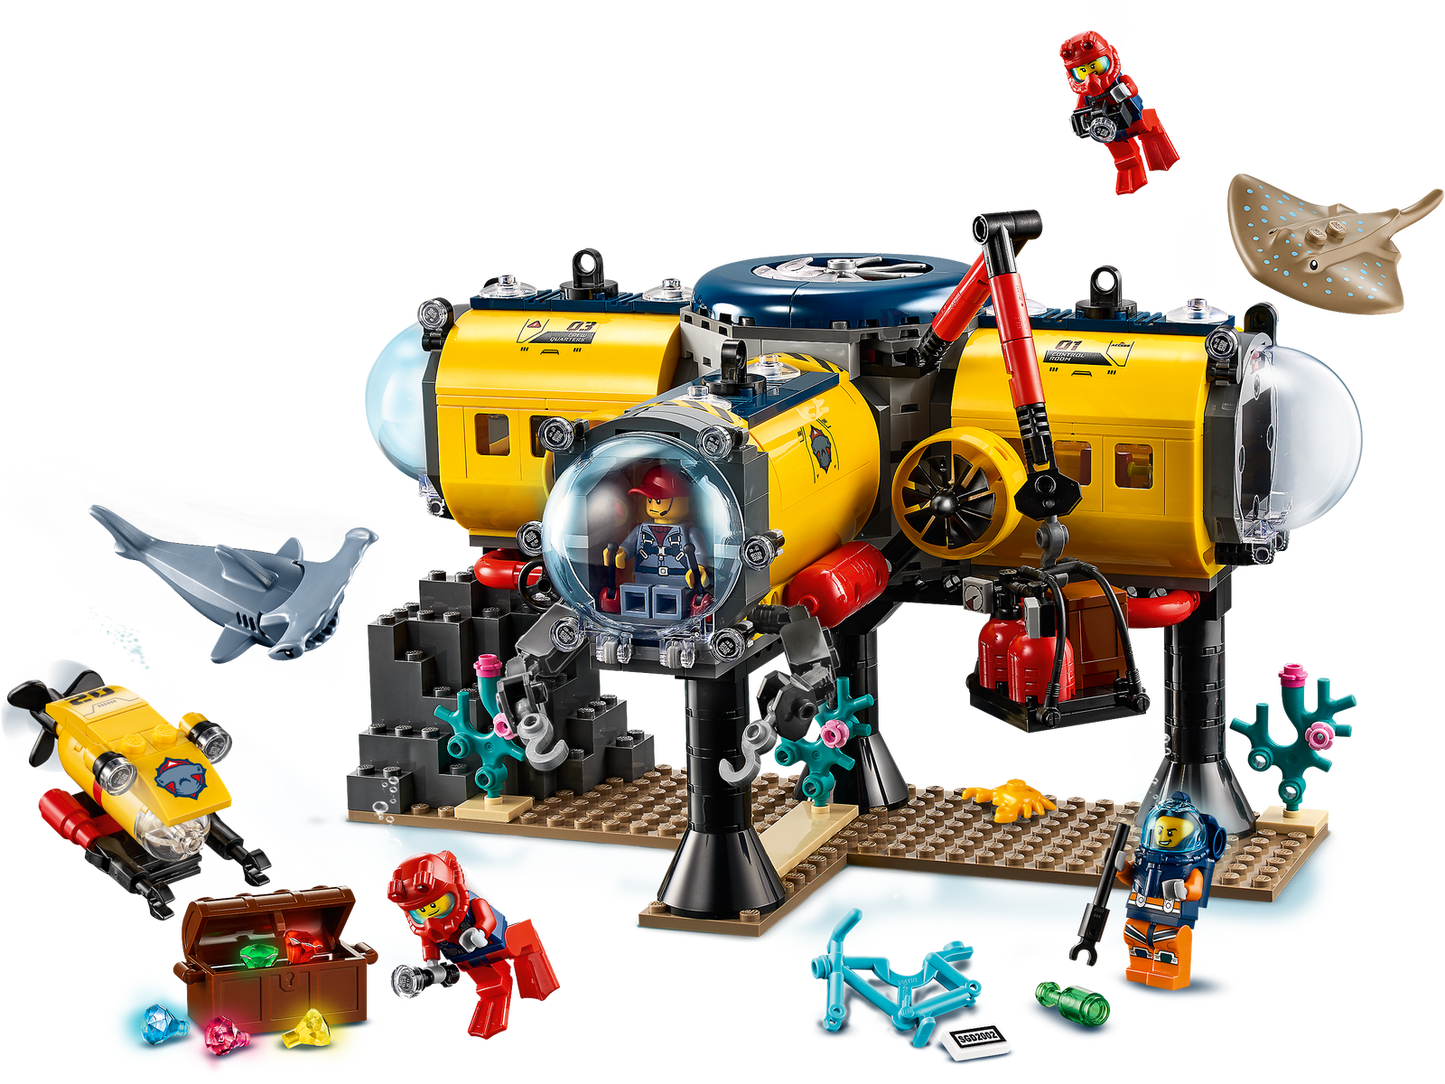 Lego City Ocean Exploration Base 60265